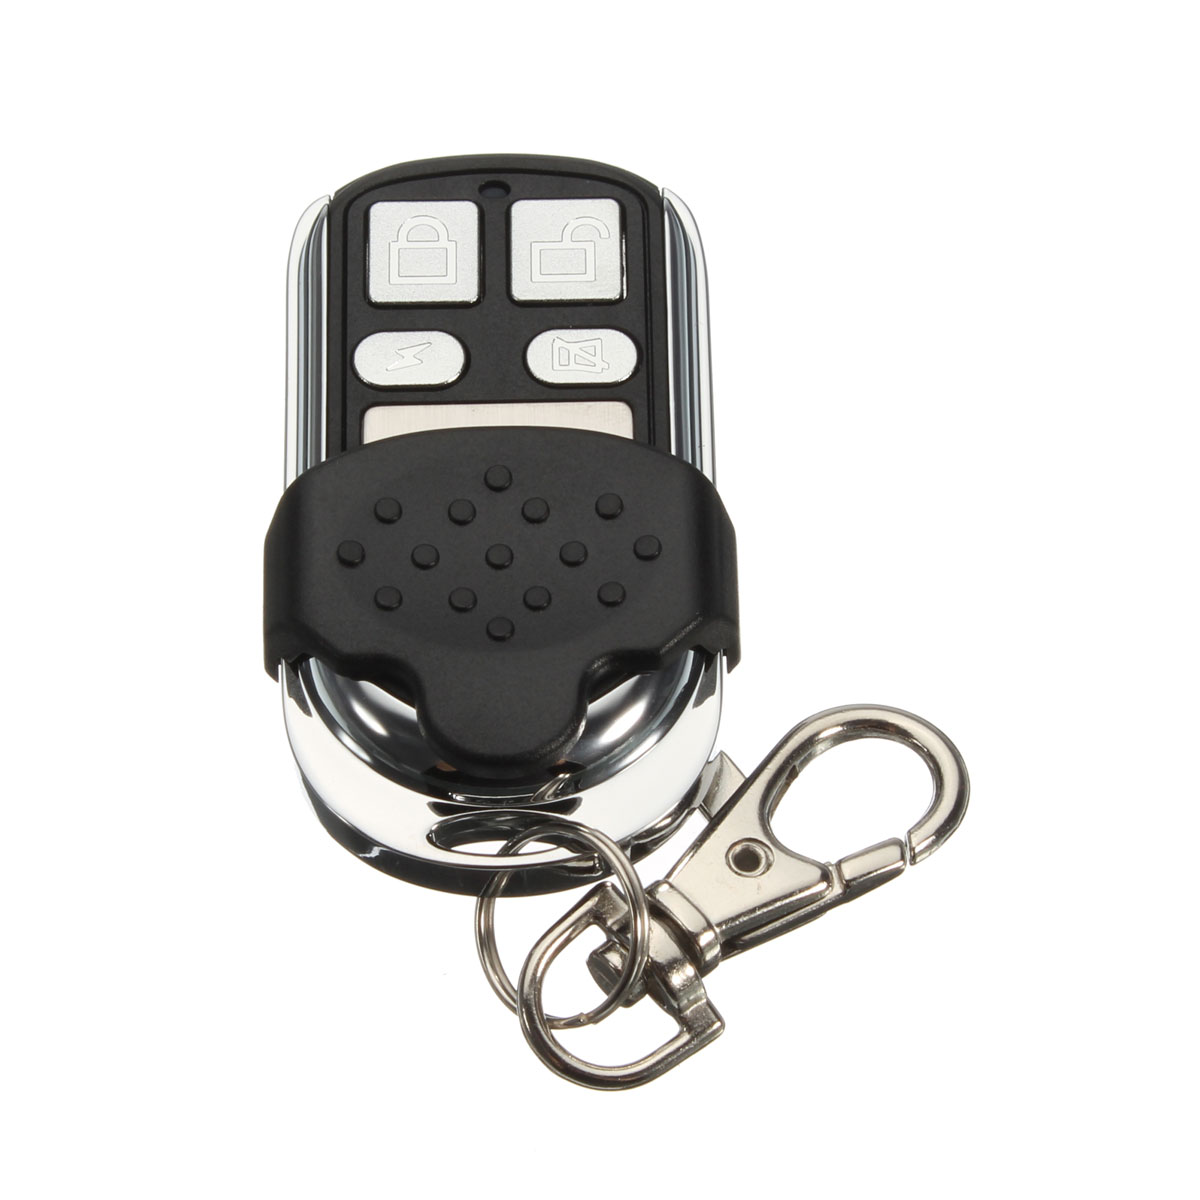 4-Button-310MHz-Garage-Gate-Key-Remote-Control-For-Steel-Line-BHT12-Boss-BHT12-1064405